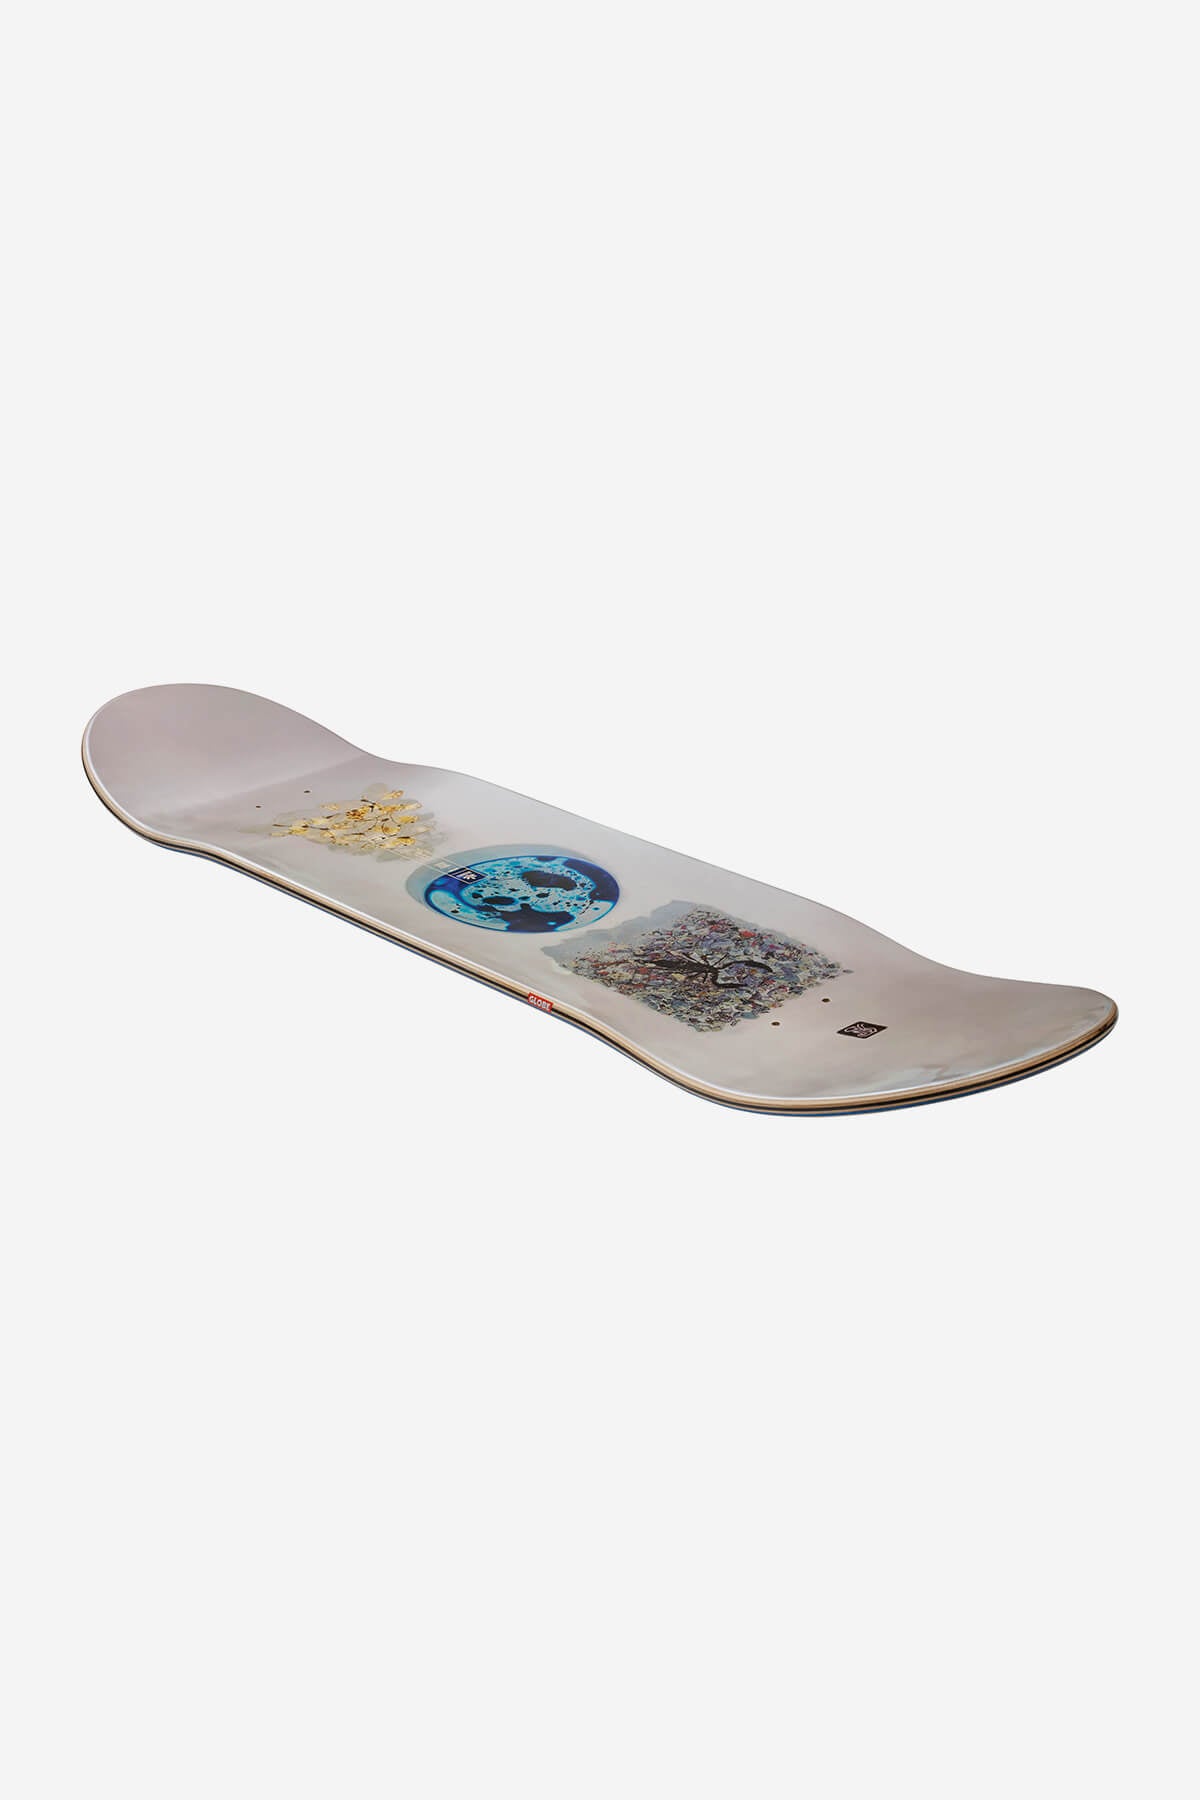 g2 rholtsu Stapel 8,25" skateboard deck